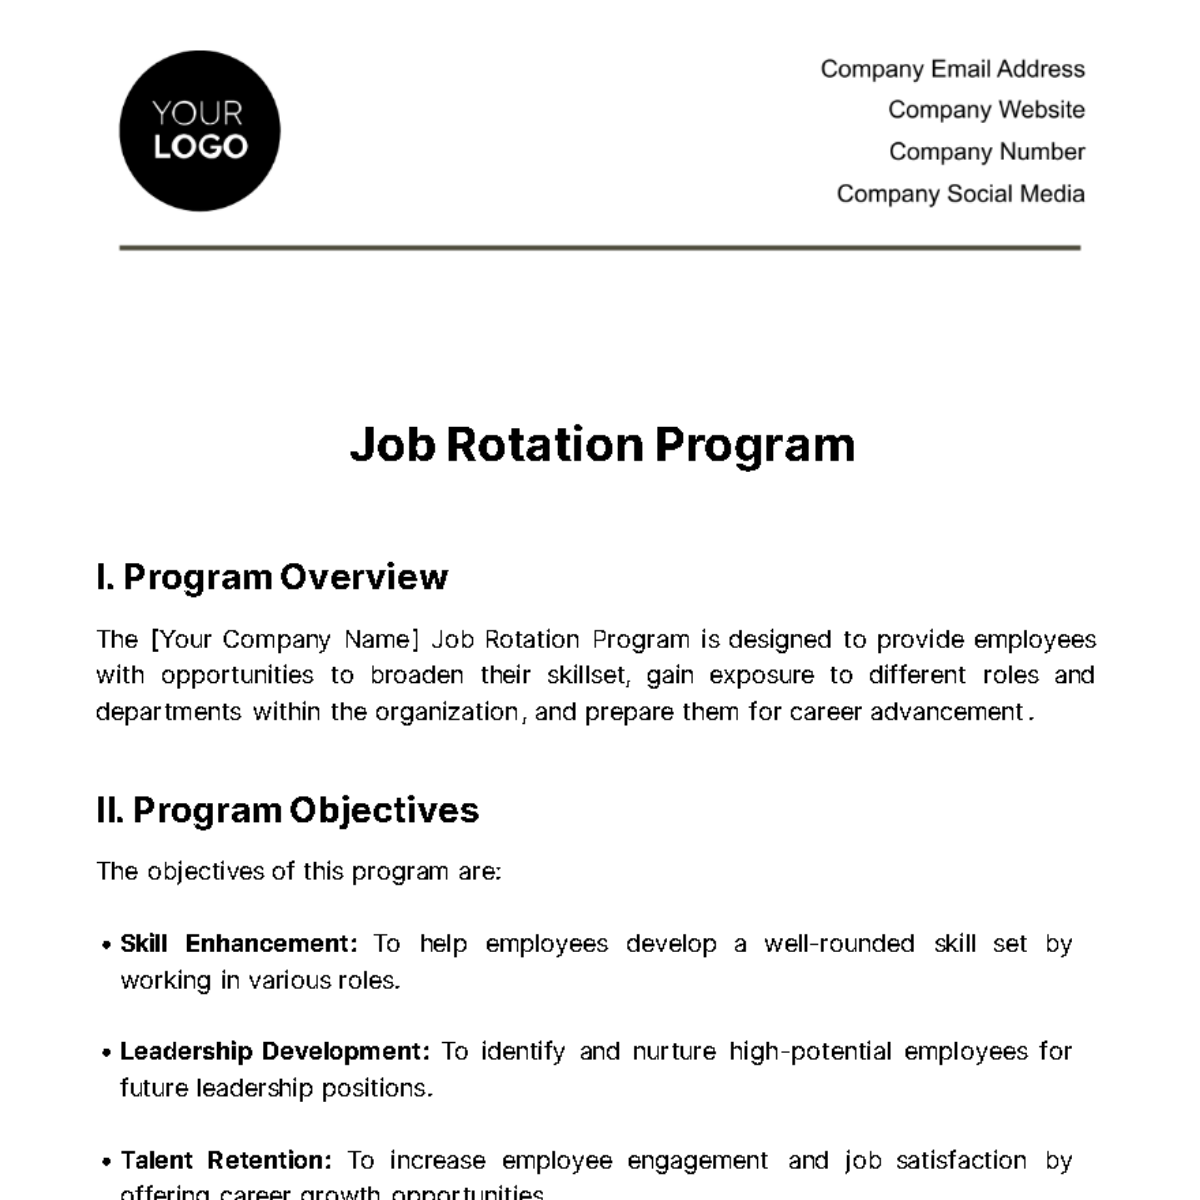 Job Rotation Program HR Template